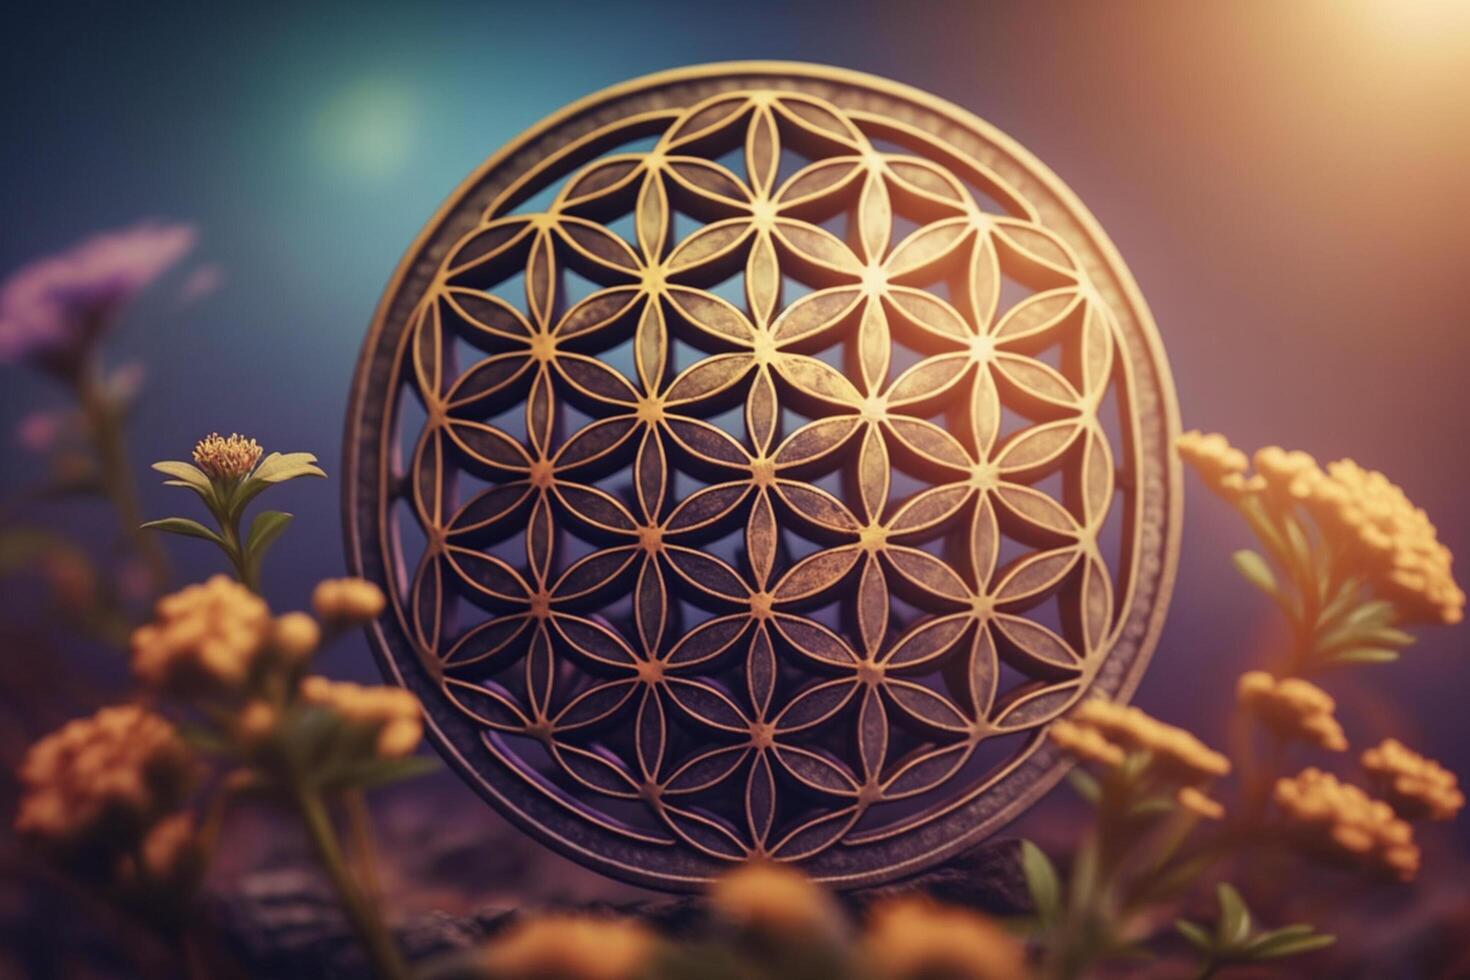 Hippie - Flower of Life Mandala - Spiritual Artwork for Meditation and Mindfulness photo